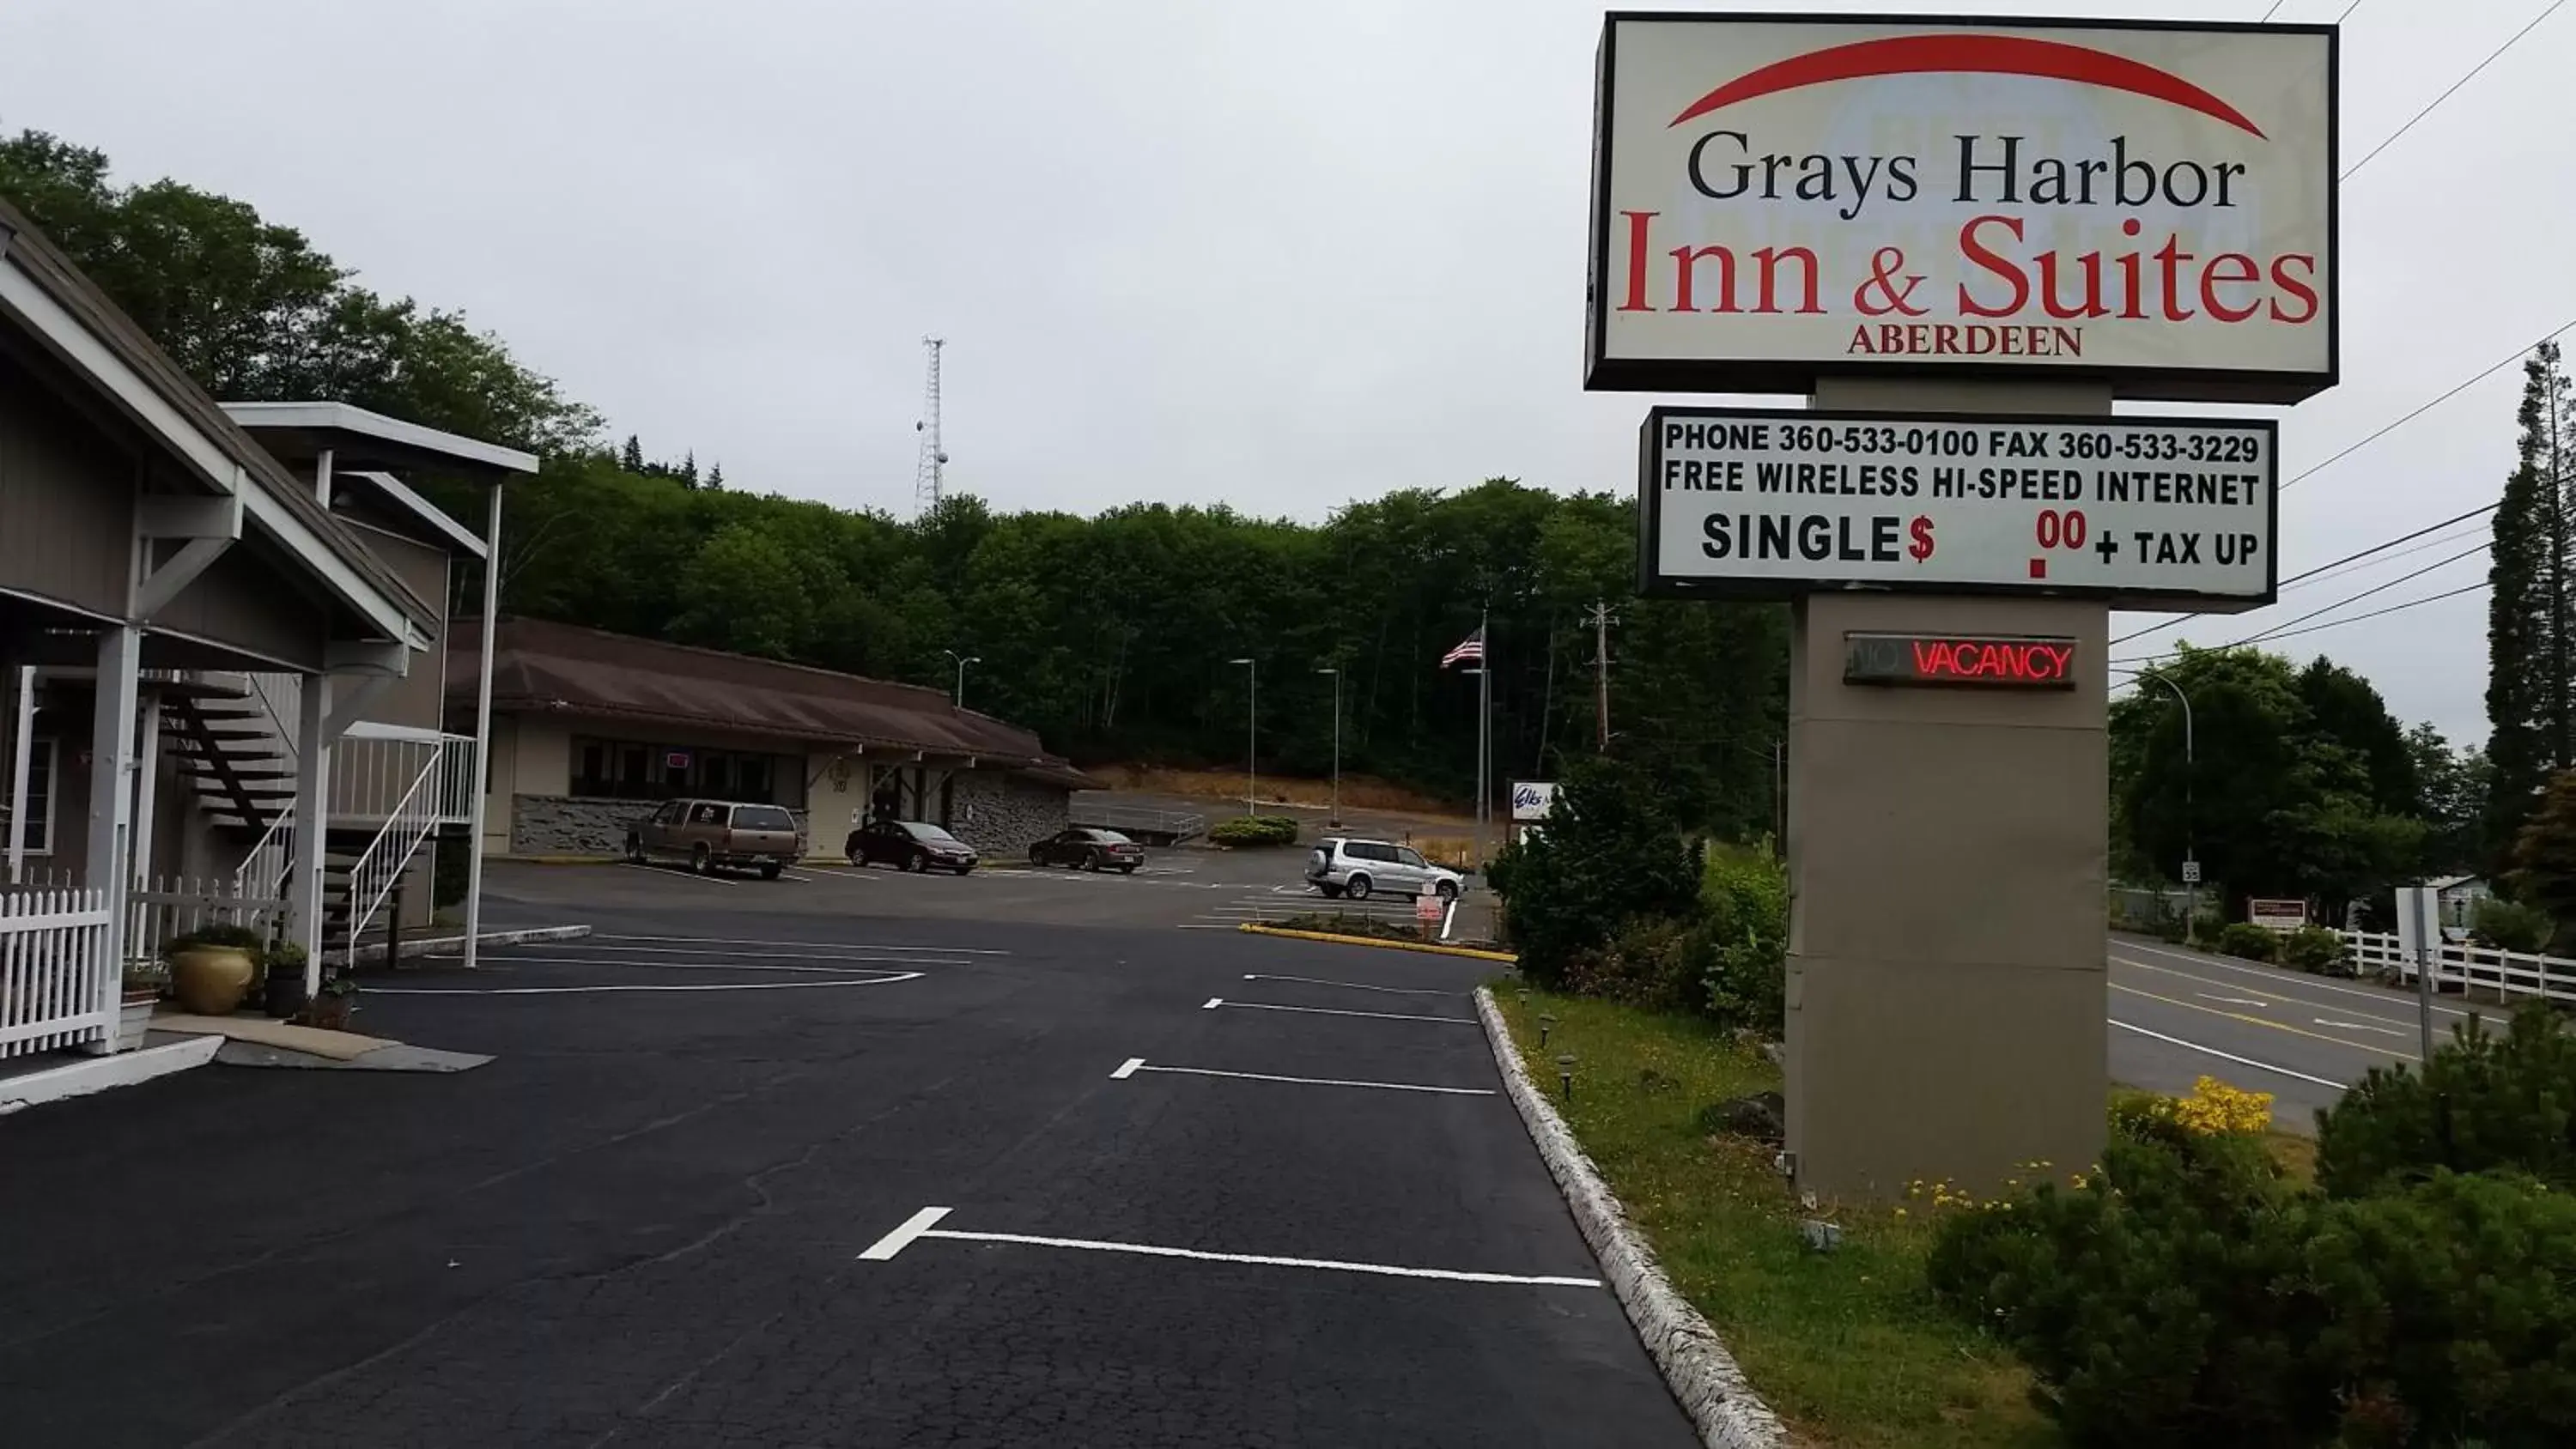 Day in Grays Harbor Inn & Suites